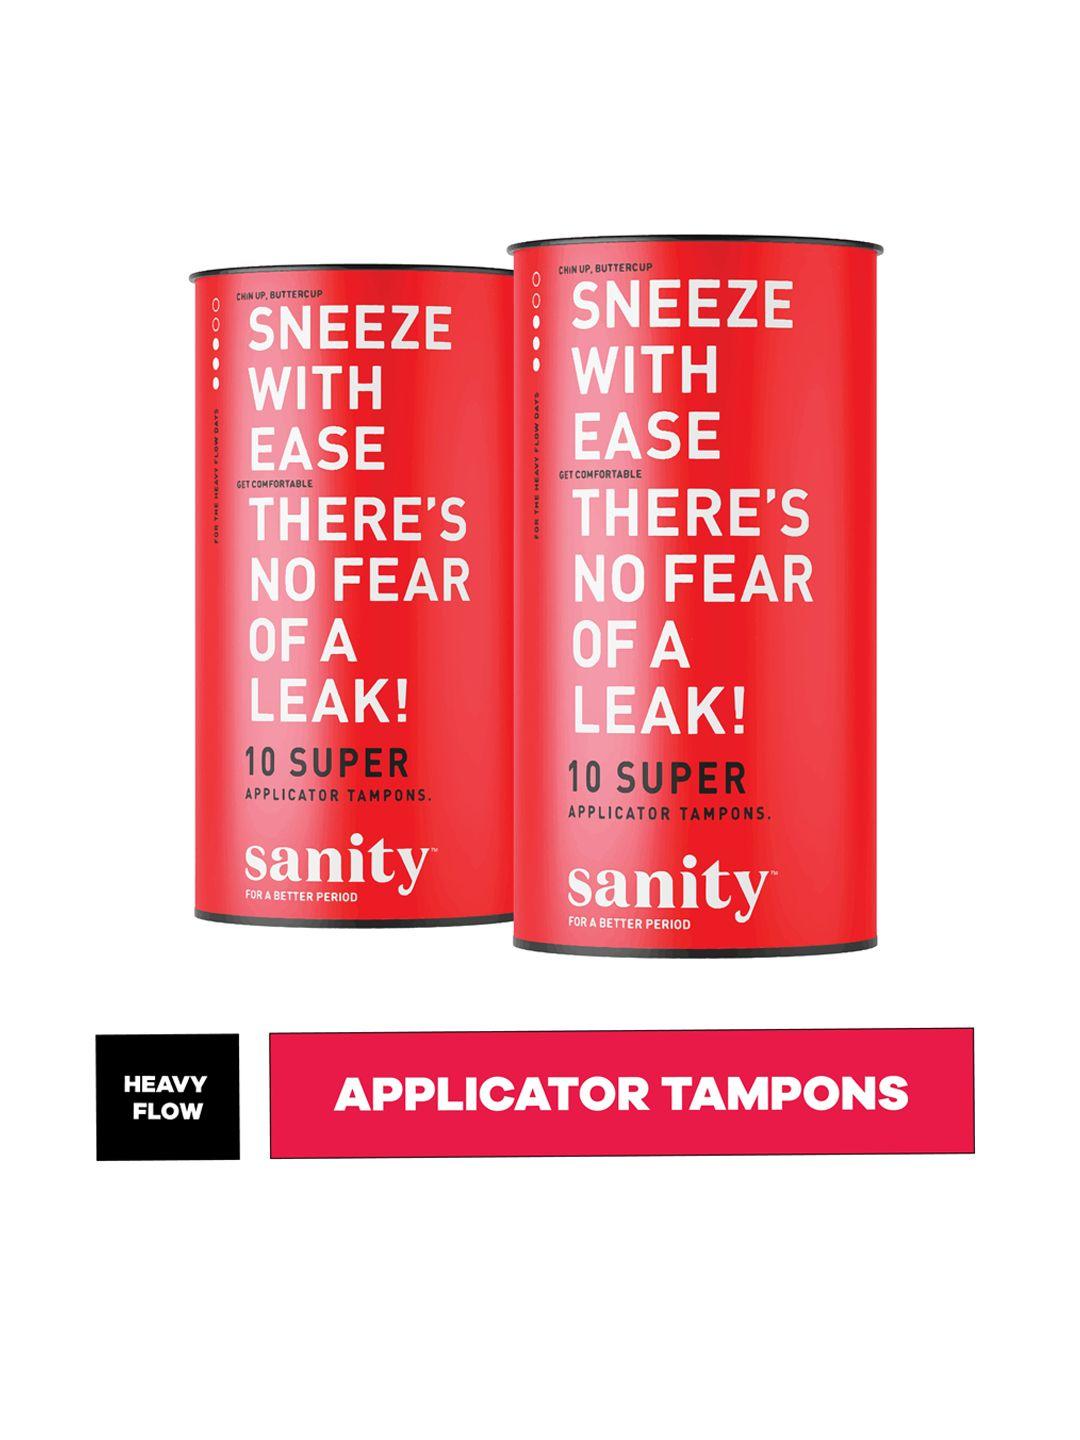 sanity-pack-of-20-super-applicator-tampons